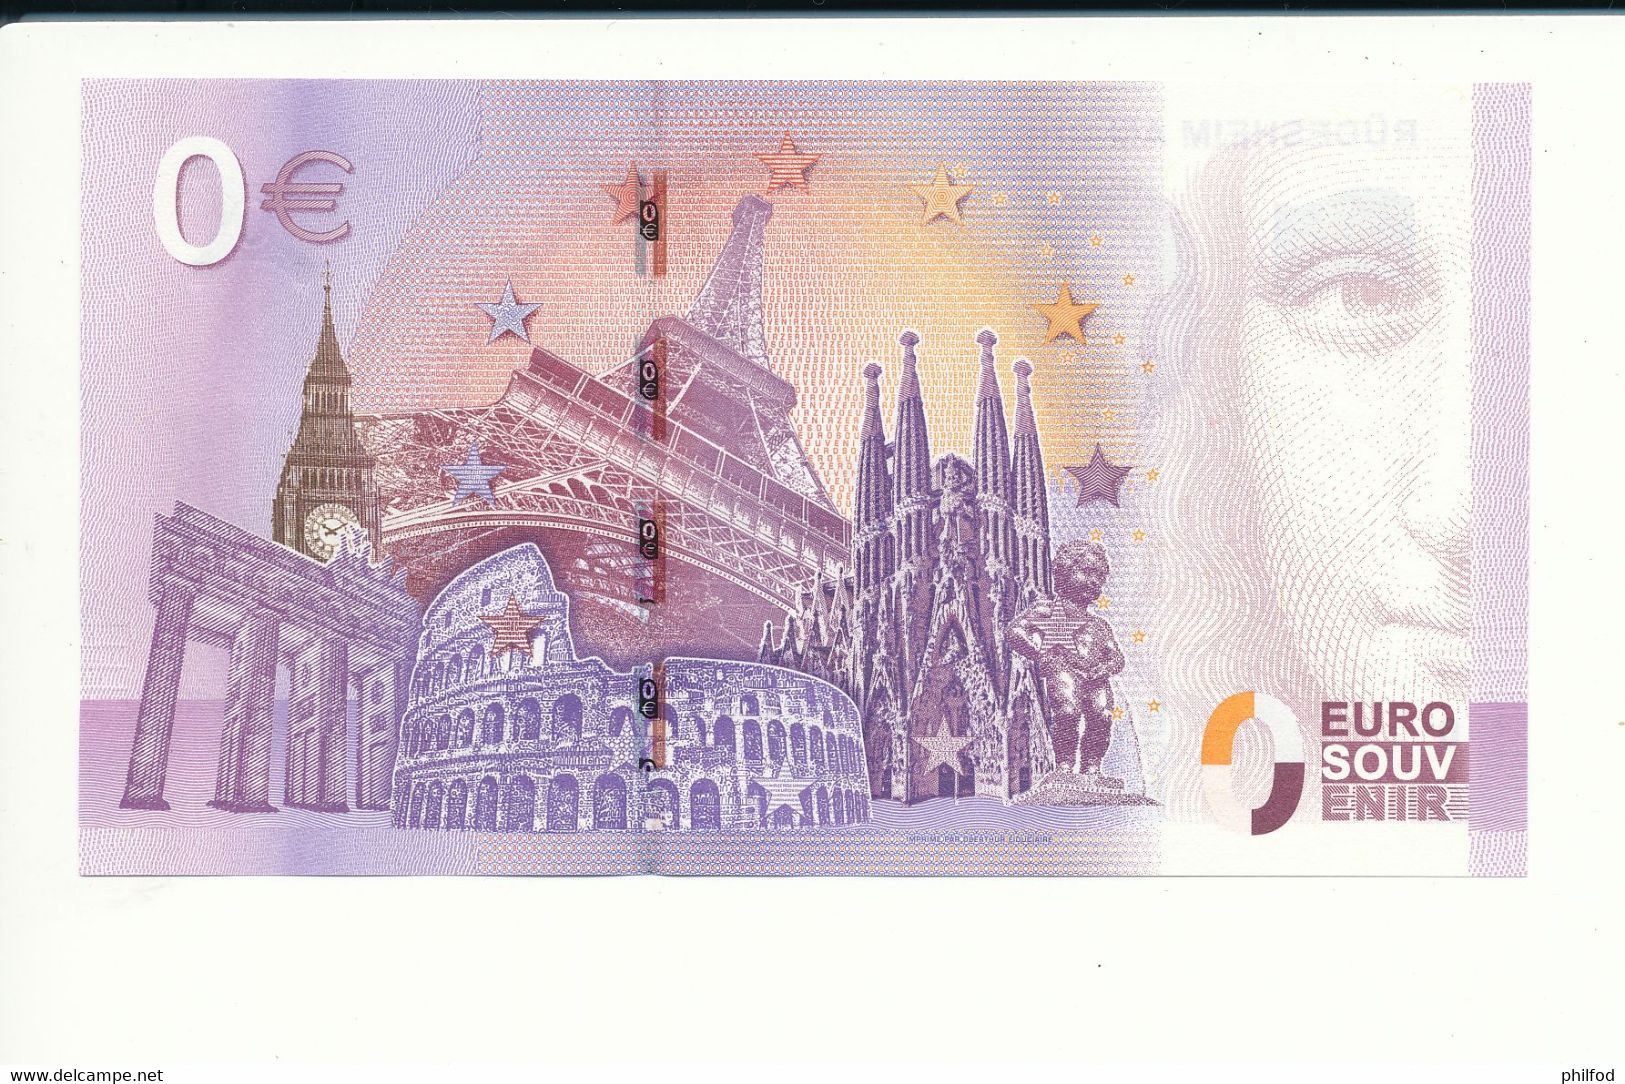 Billet Souvenir - 0 Euro - XEHF - 2016-1 - RÜDESHEIM AM RHEIN - N° 2209 - Lots & Kiloware - Banknotes